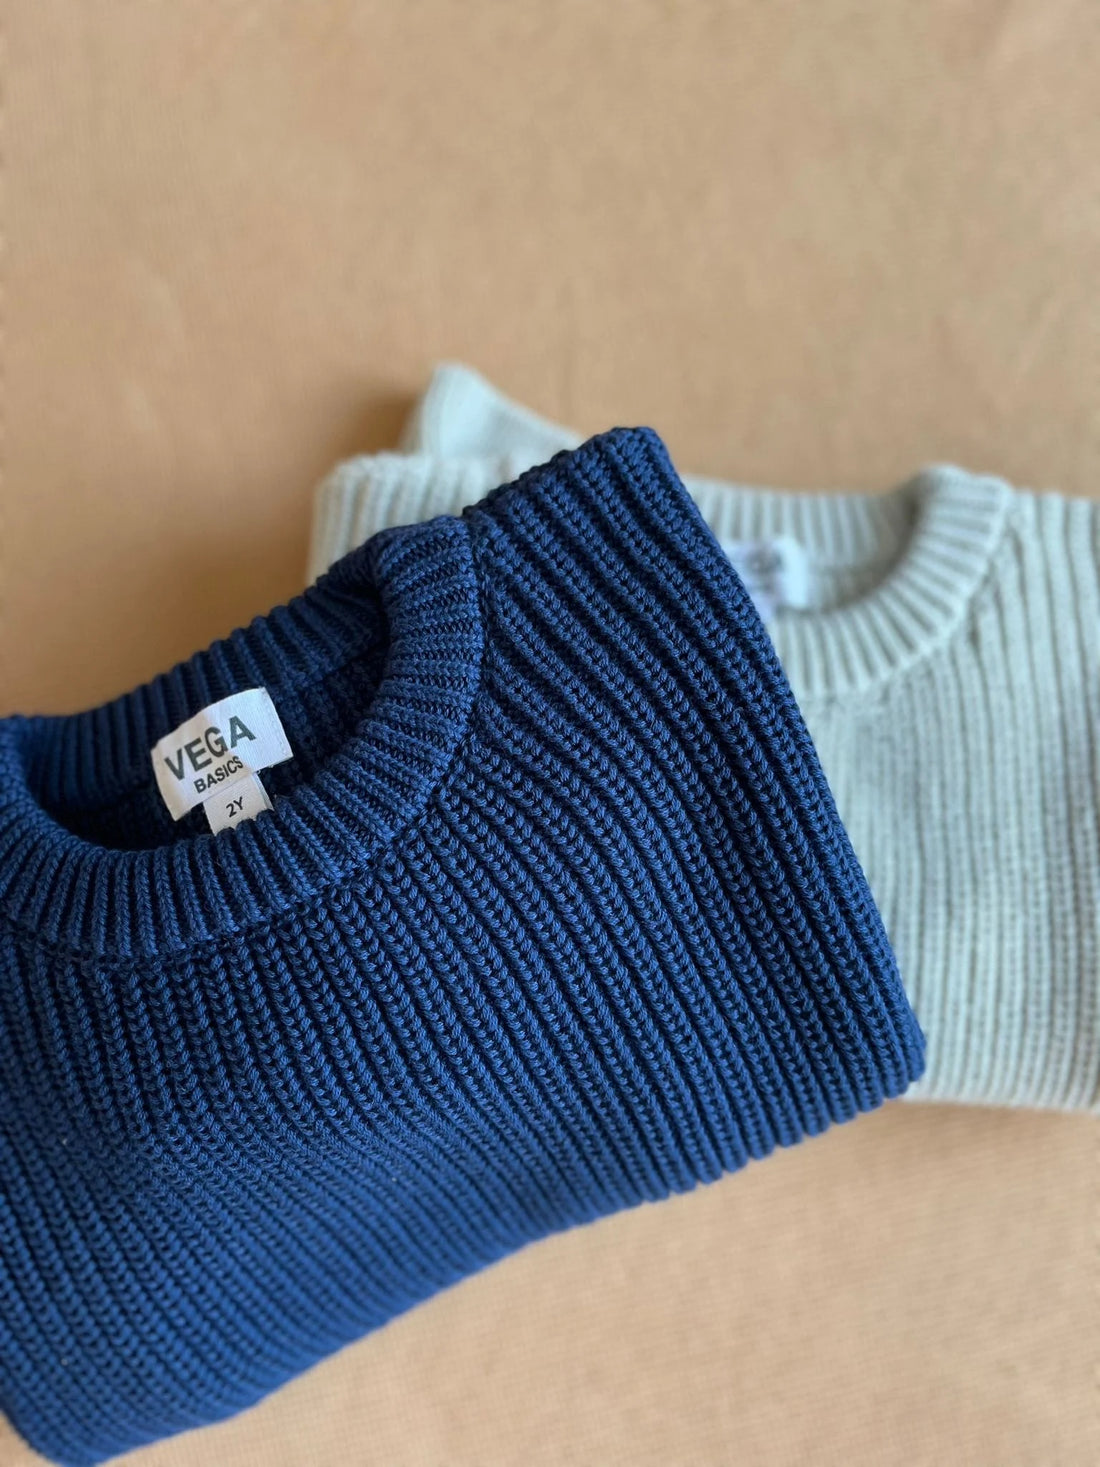 Vega Basics - cordero knit sweater - navy melange